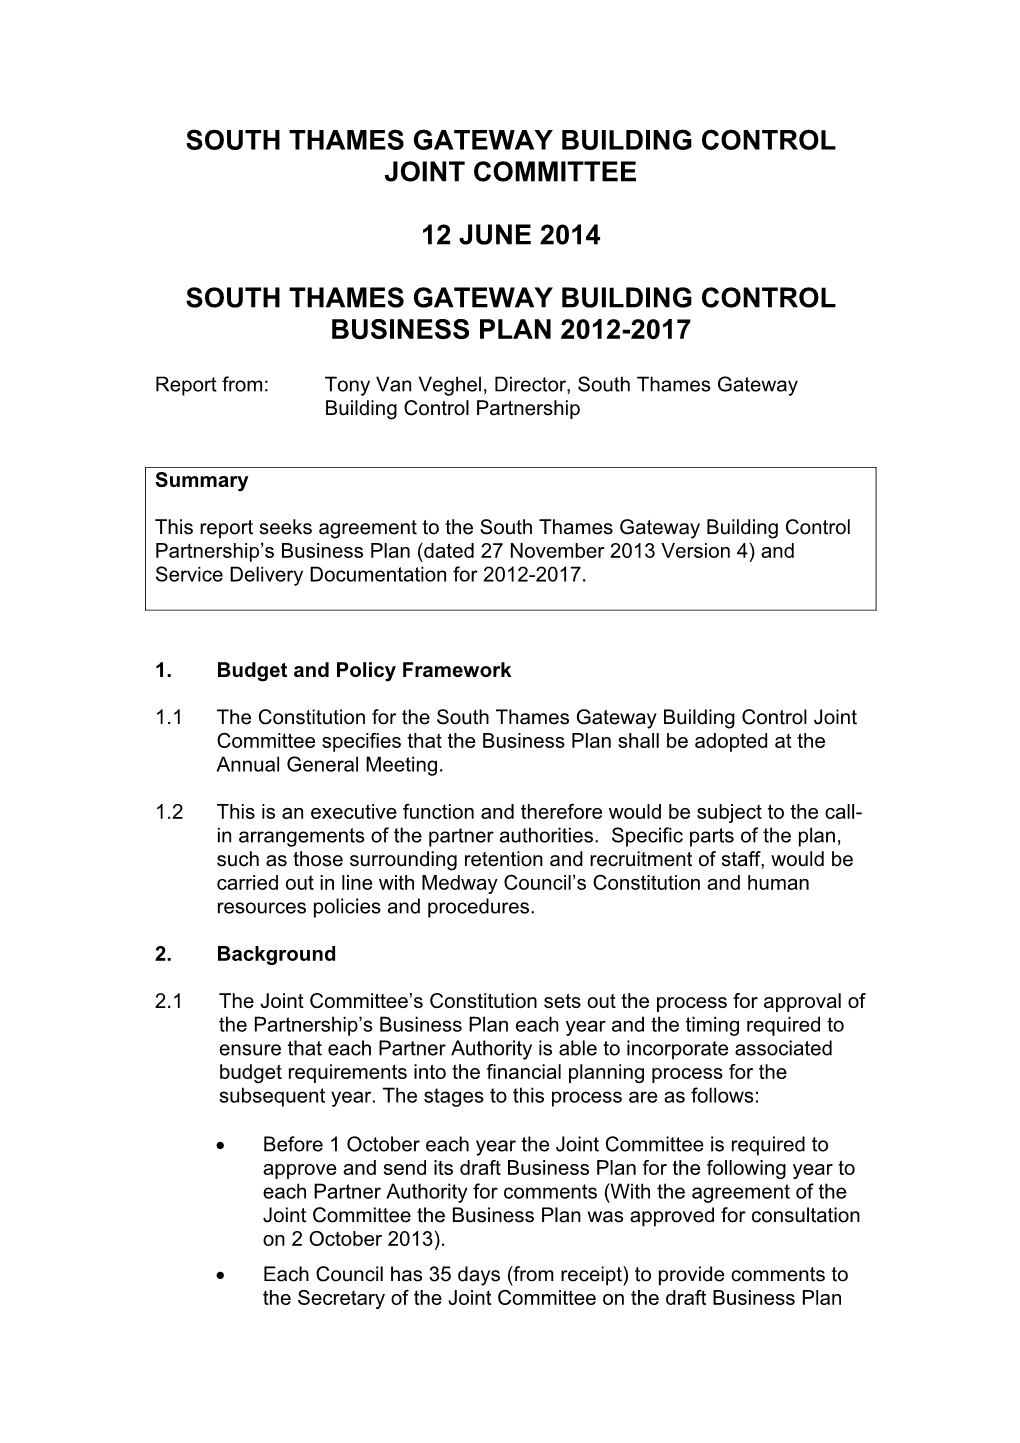 South Thames Gateway Building Control Partnership Business Plan